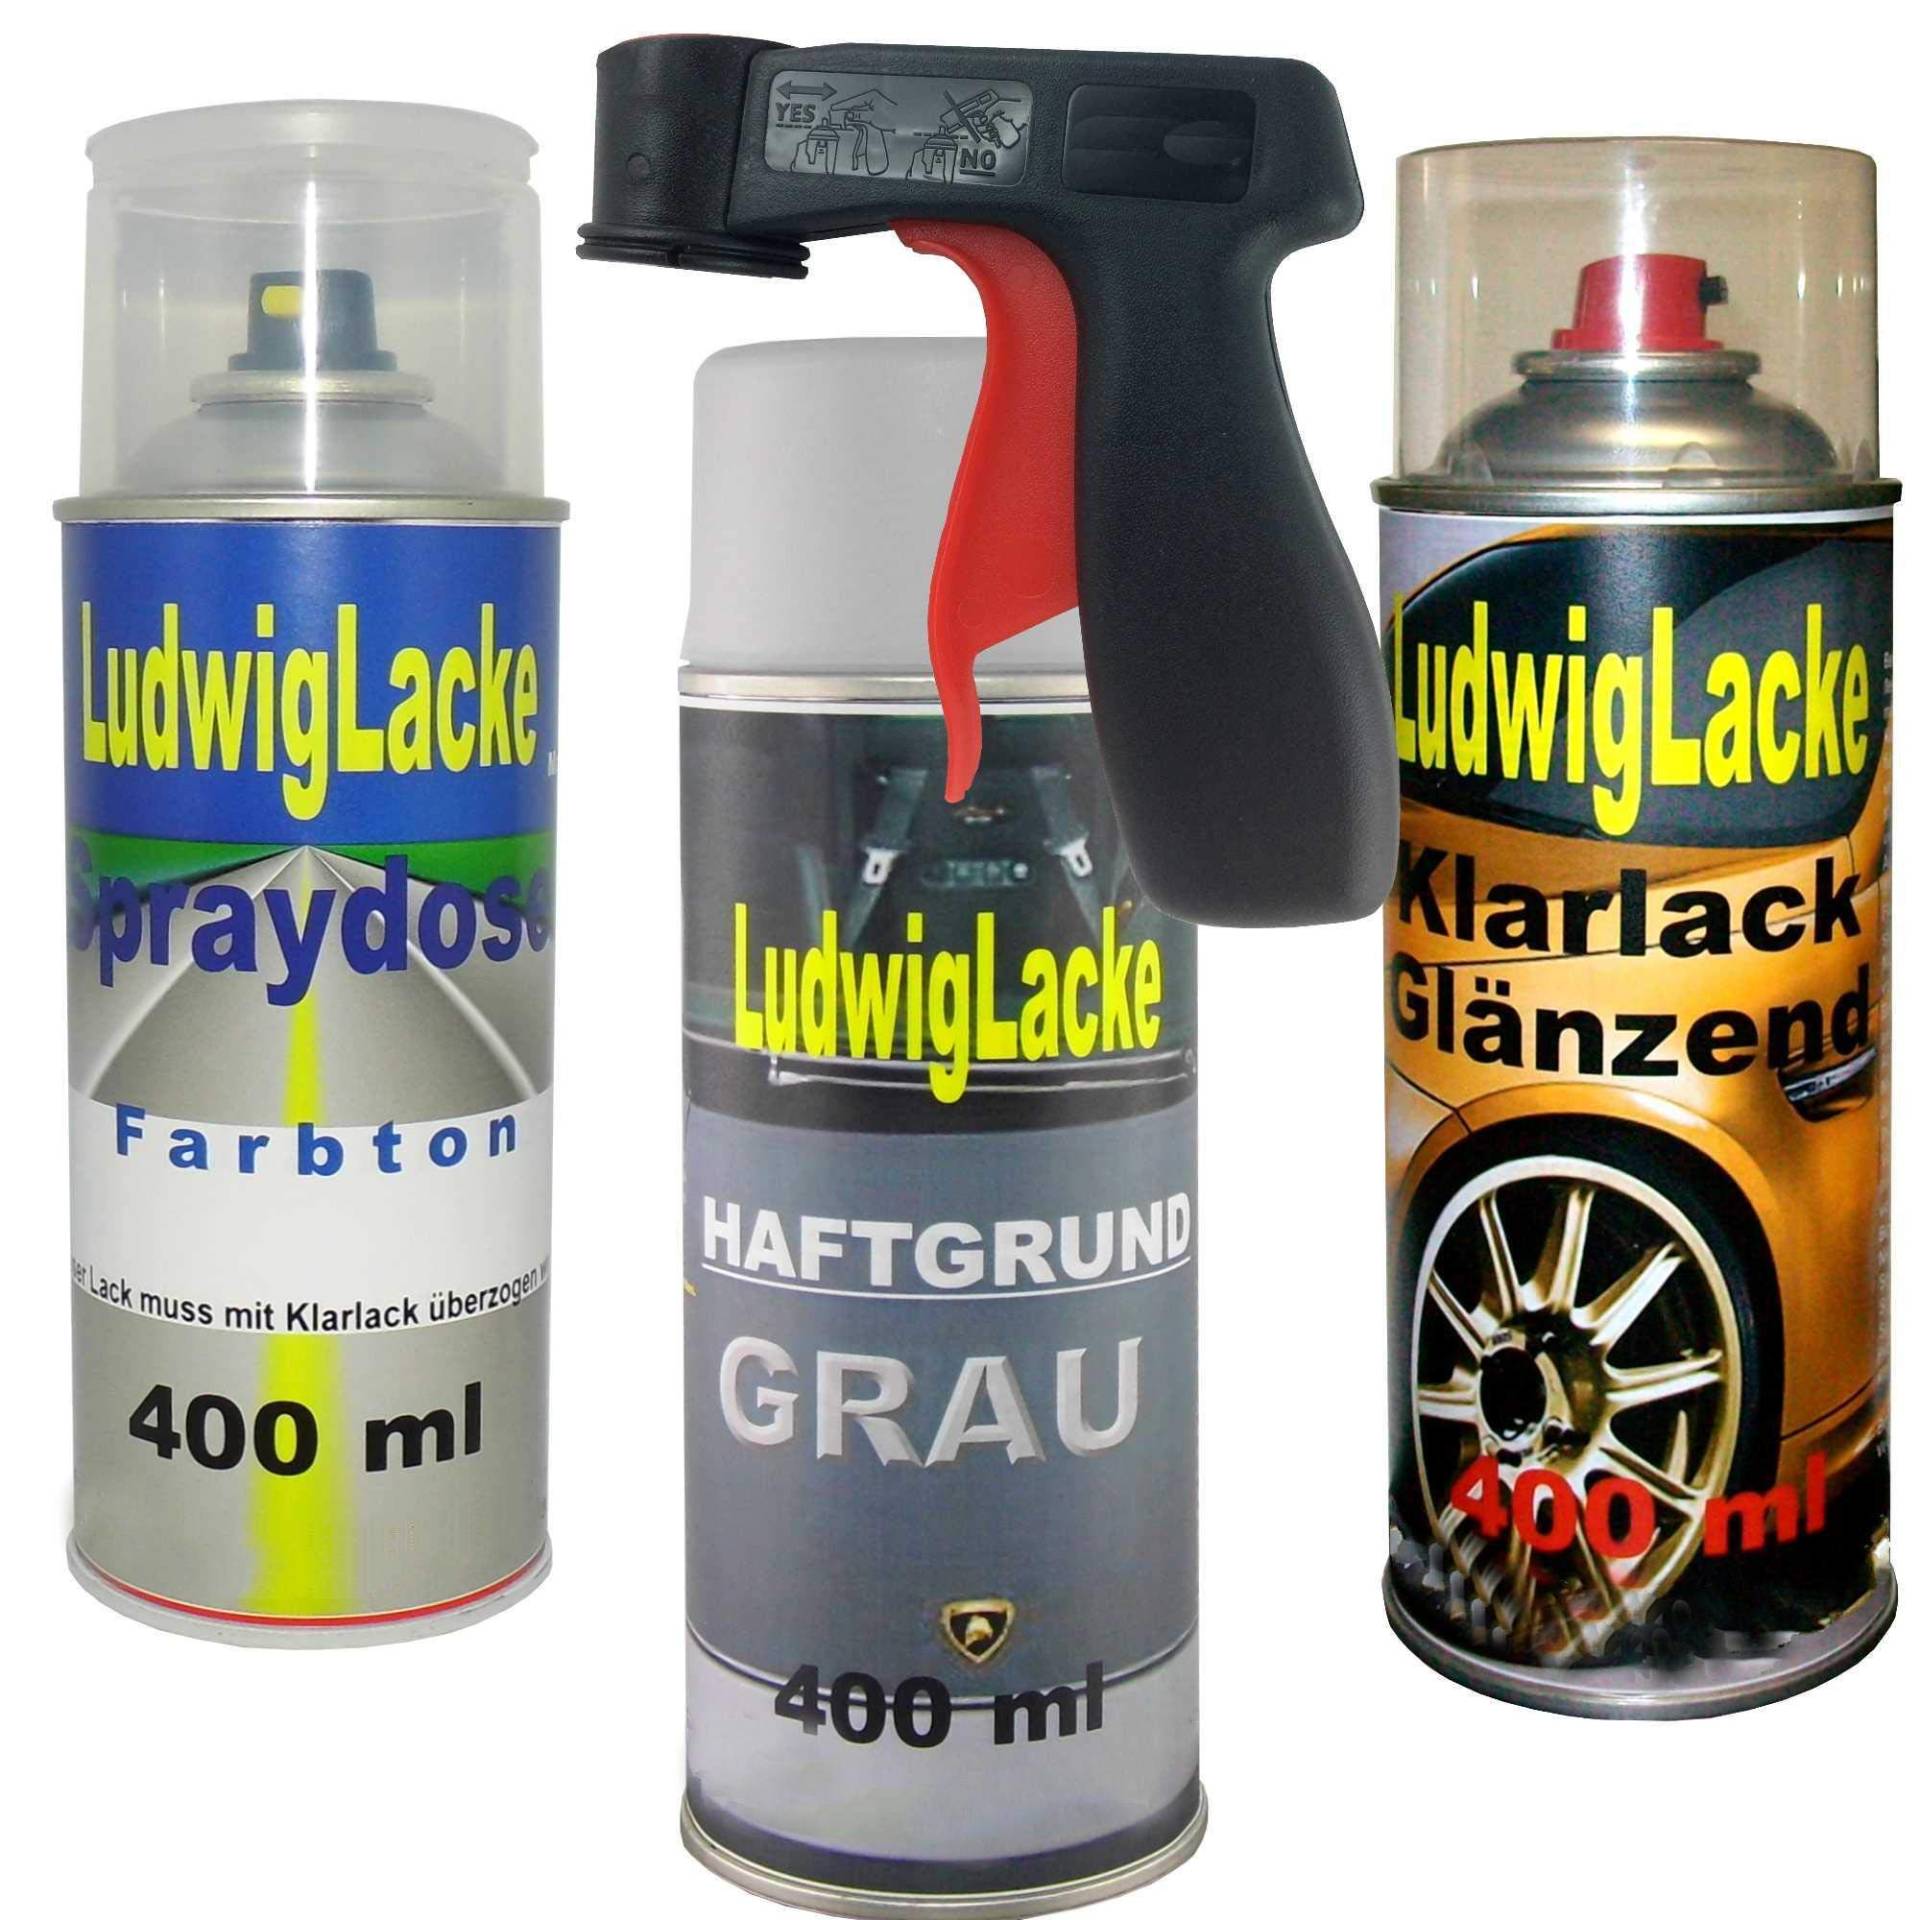 Ludwig Lacke 4 TLG. Lackierset Sprayset + Haftgrund grau + Haltegriff von Ludwiglacke